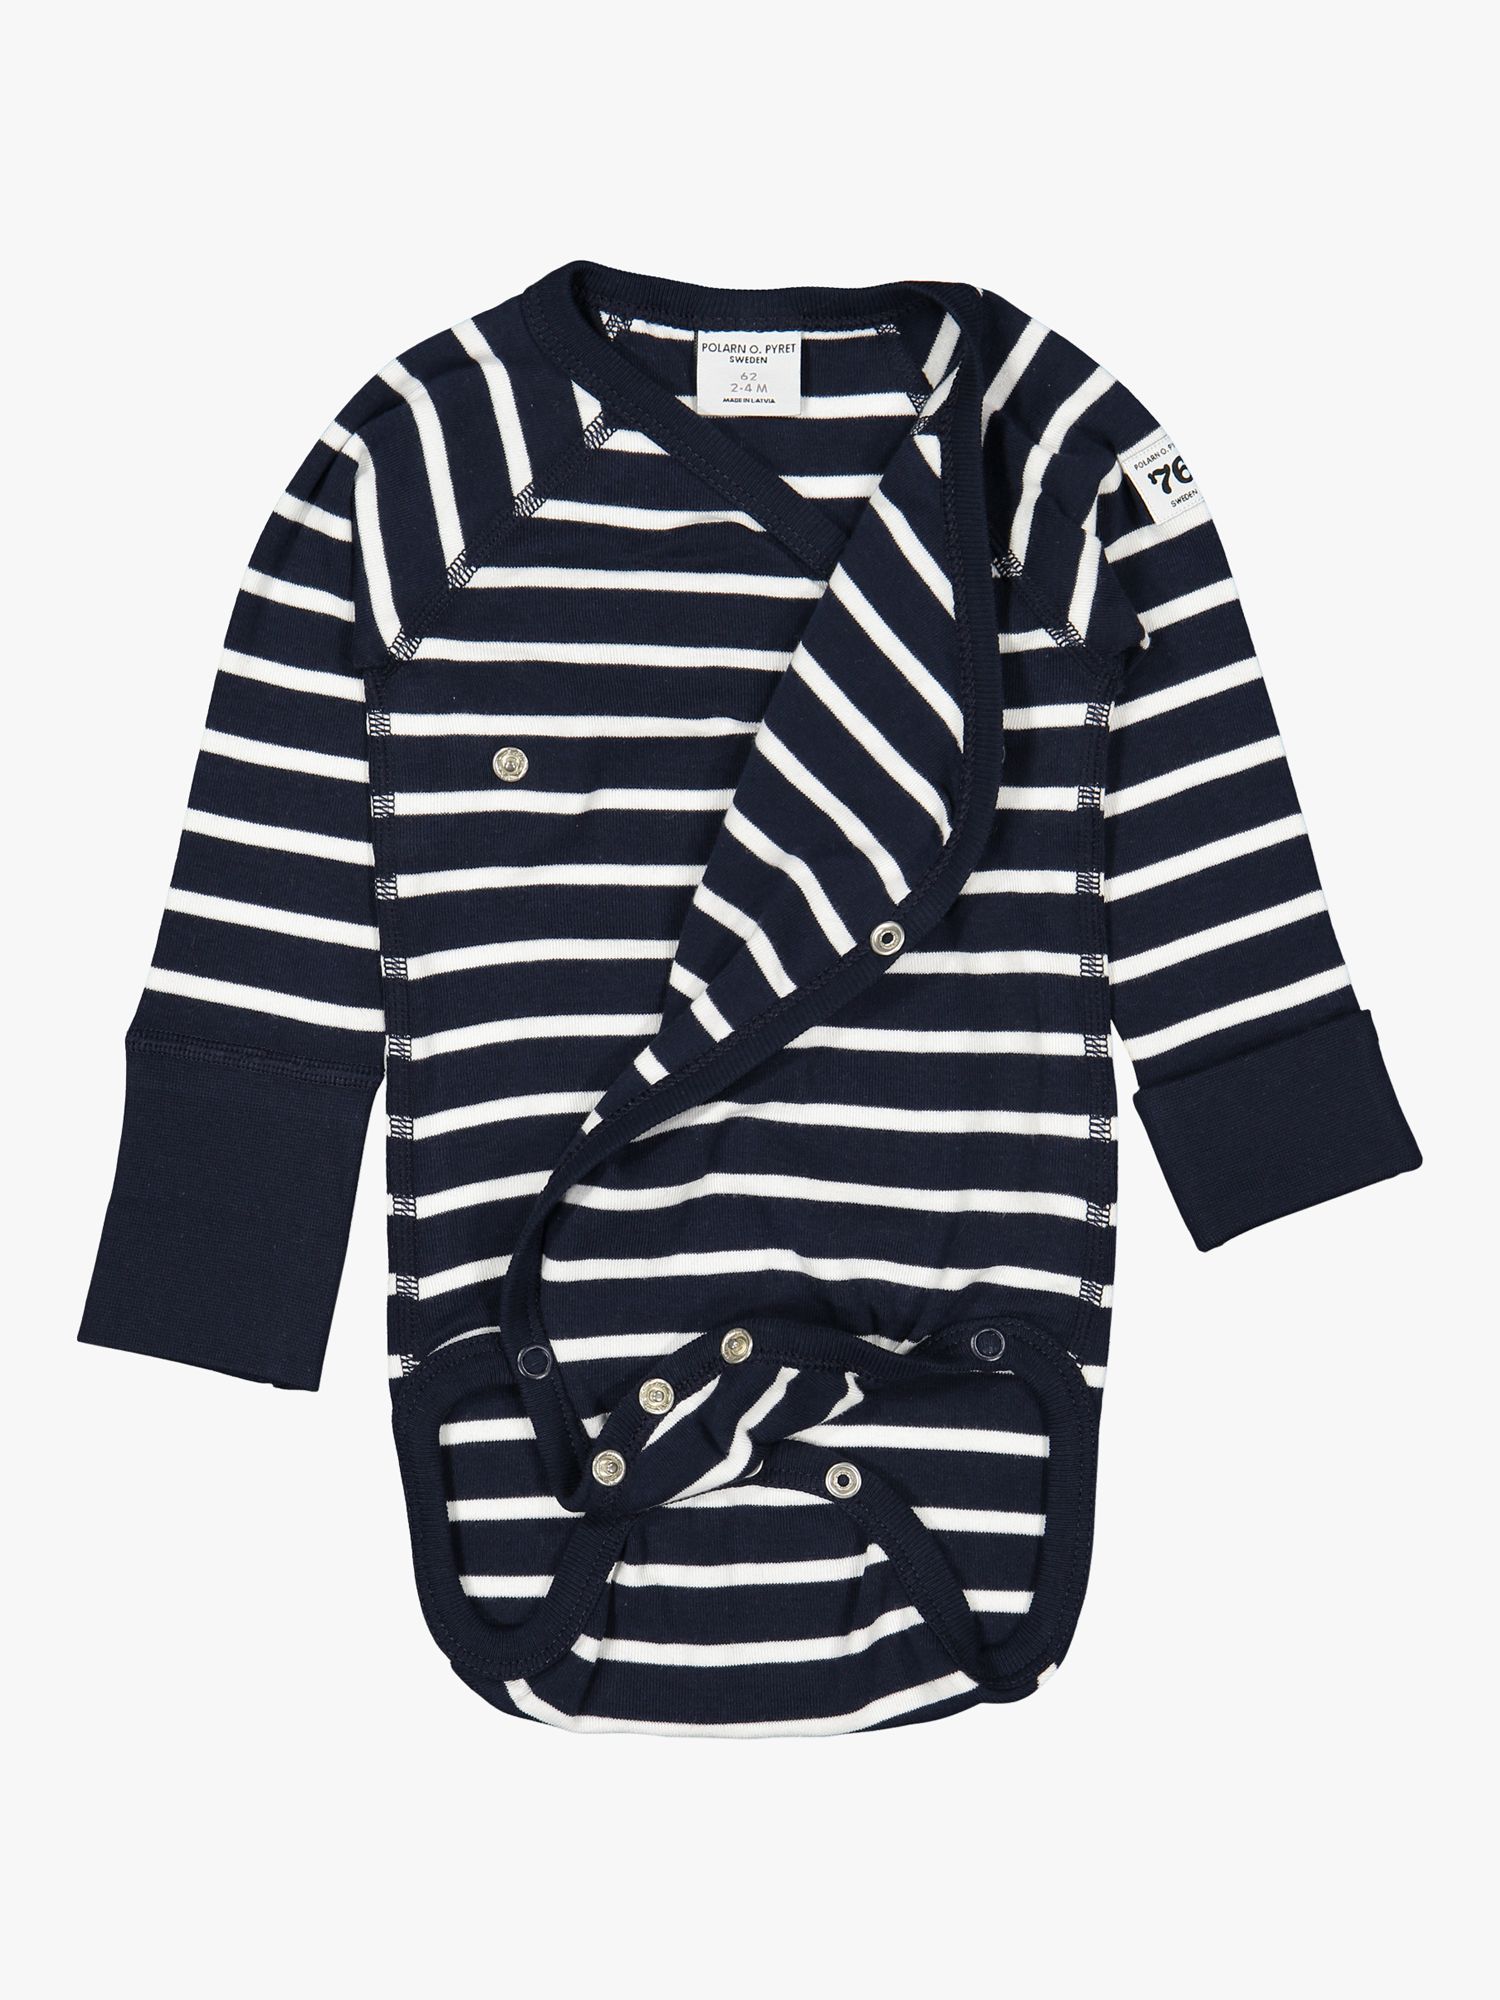 Polarn O. Pyret Baby GOTS Organic Cotton Stripe Wraparound Bodysuit, Blue, Early baby